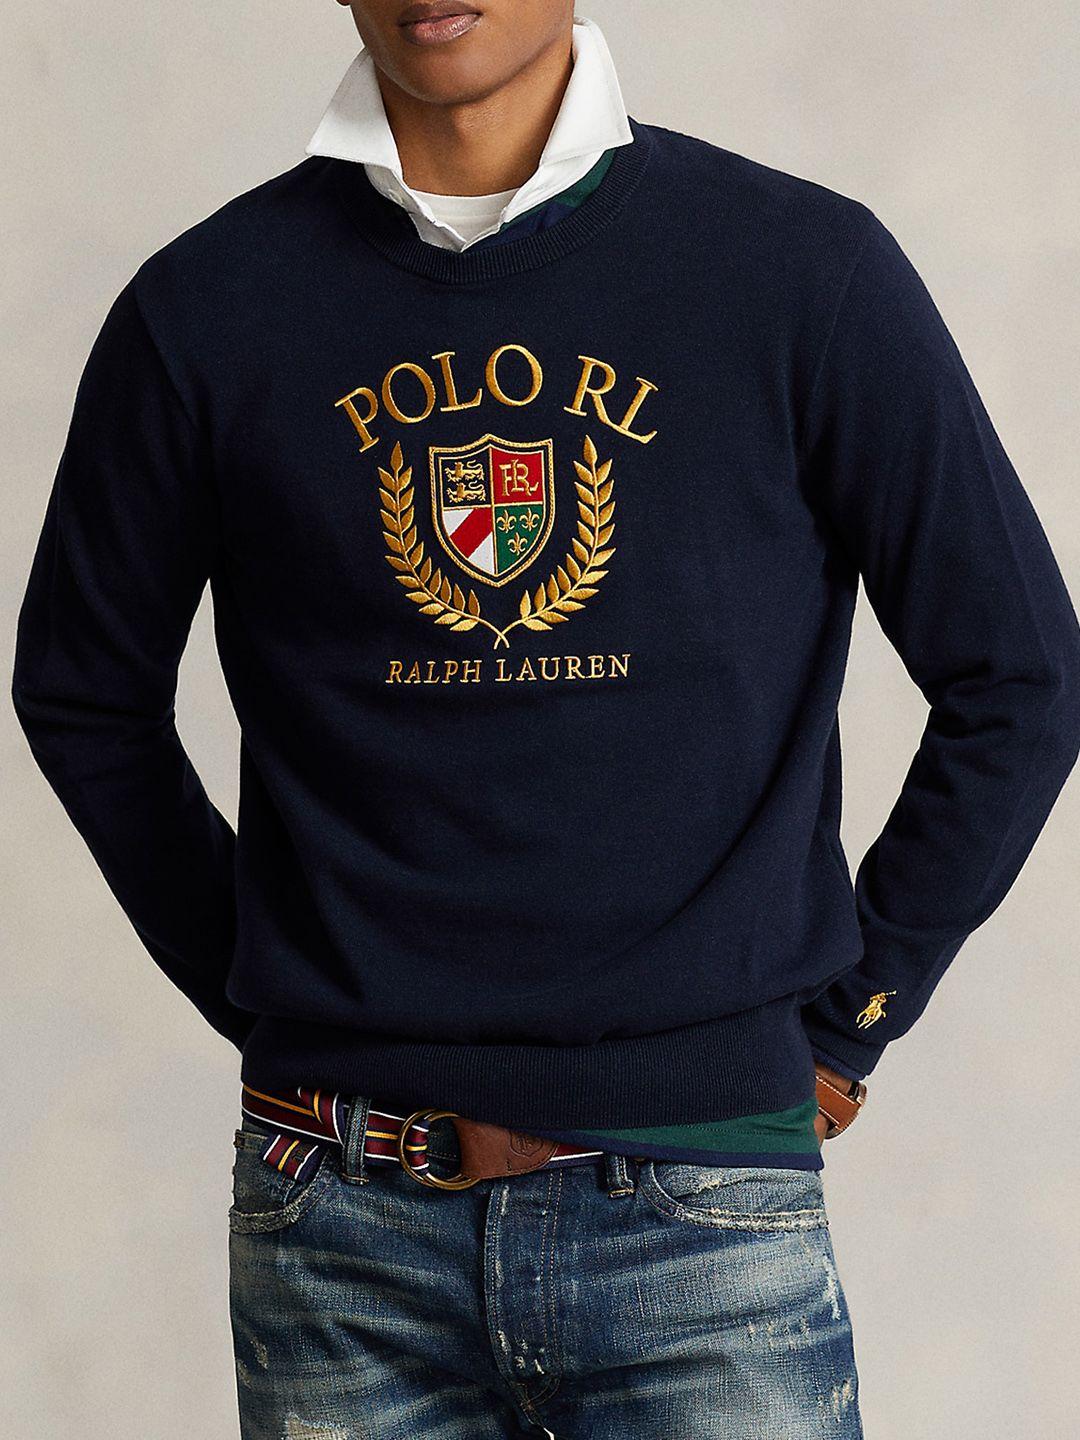 polo ralph lauren brand logo embroidered pure cotton pullover